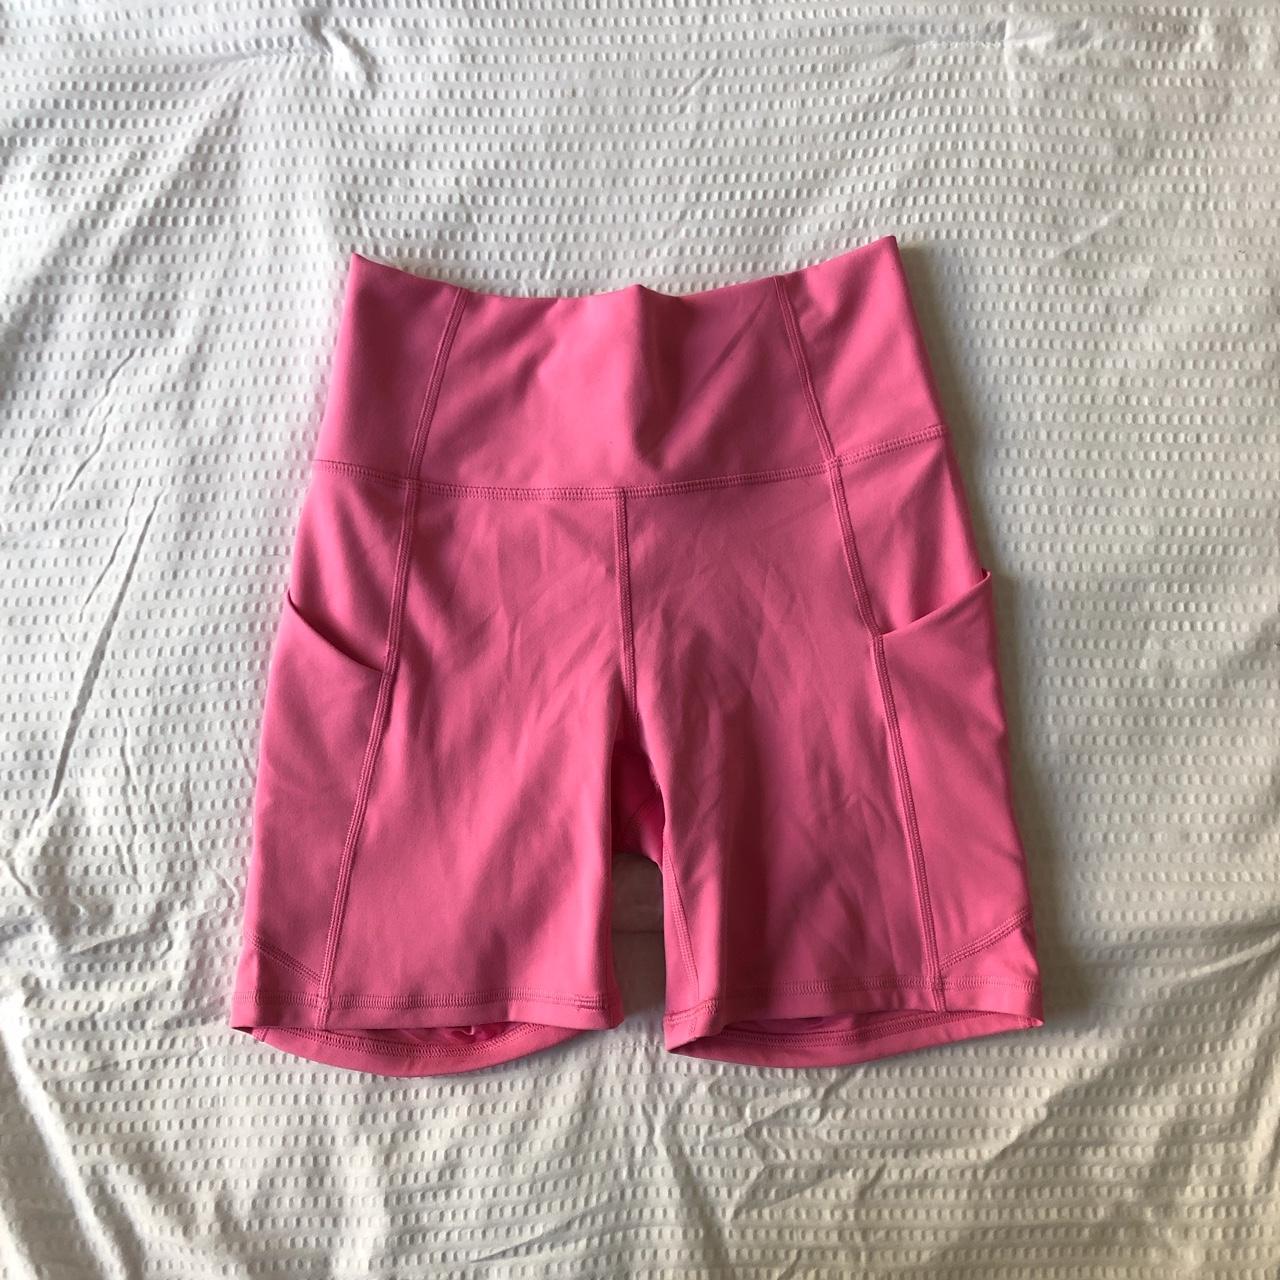 Fabletics Women's Pink Shorts | Depop